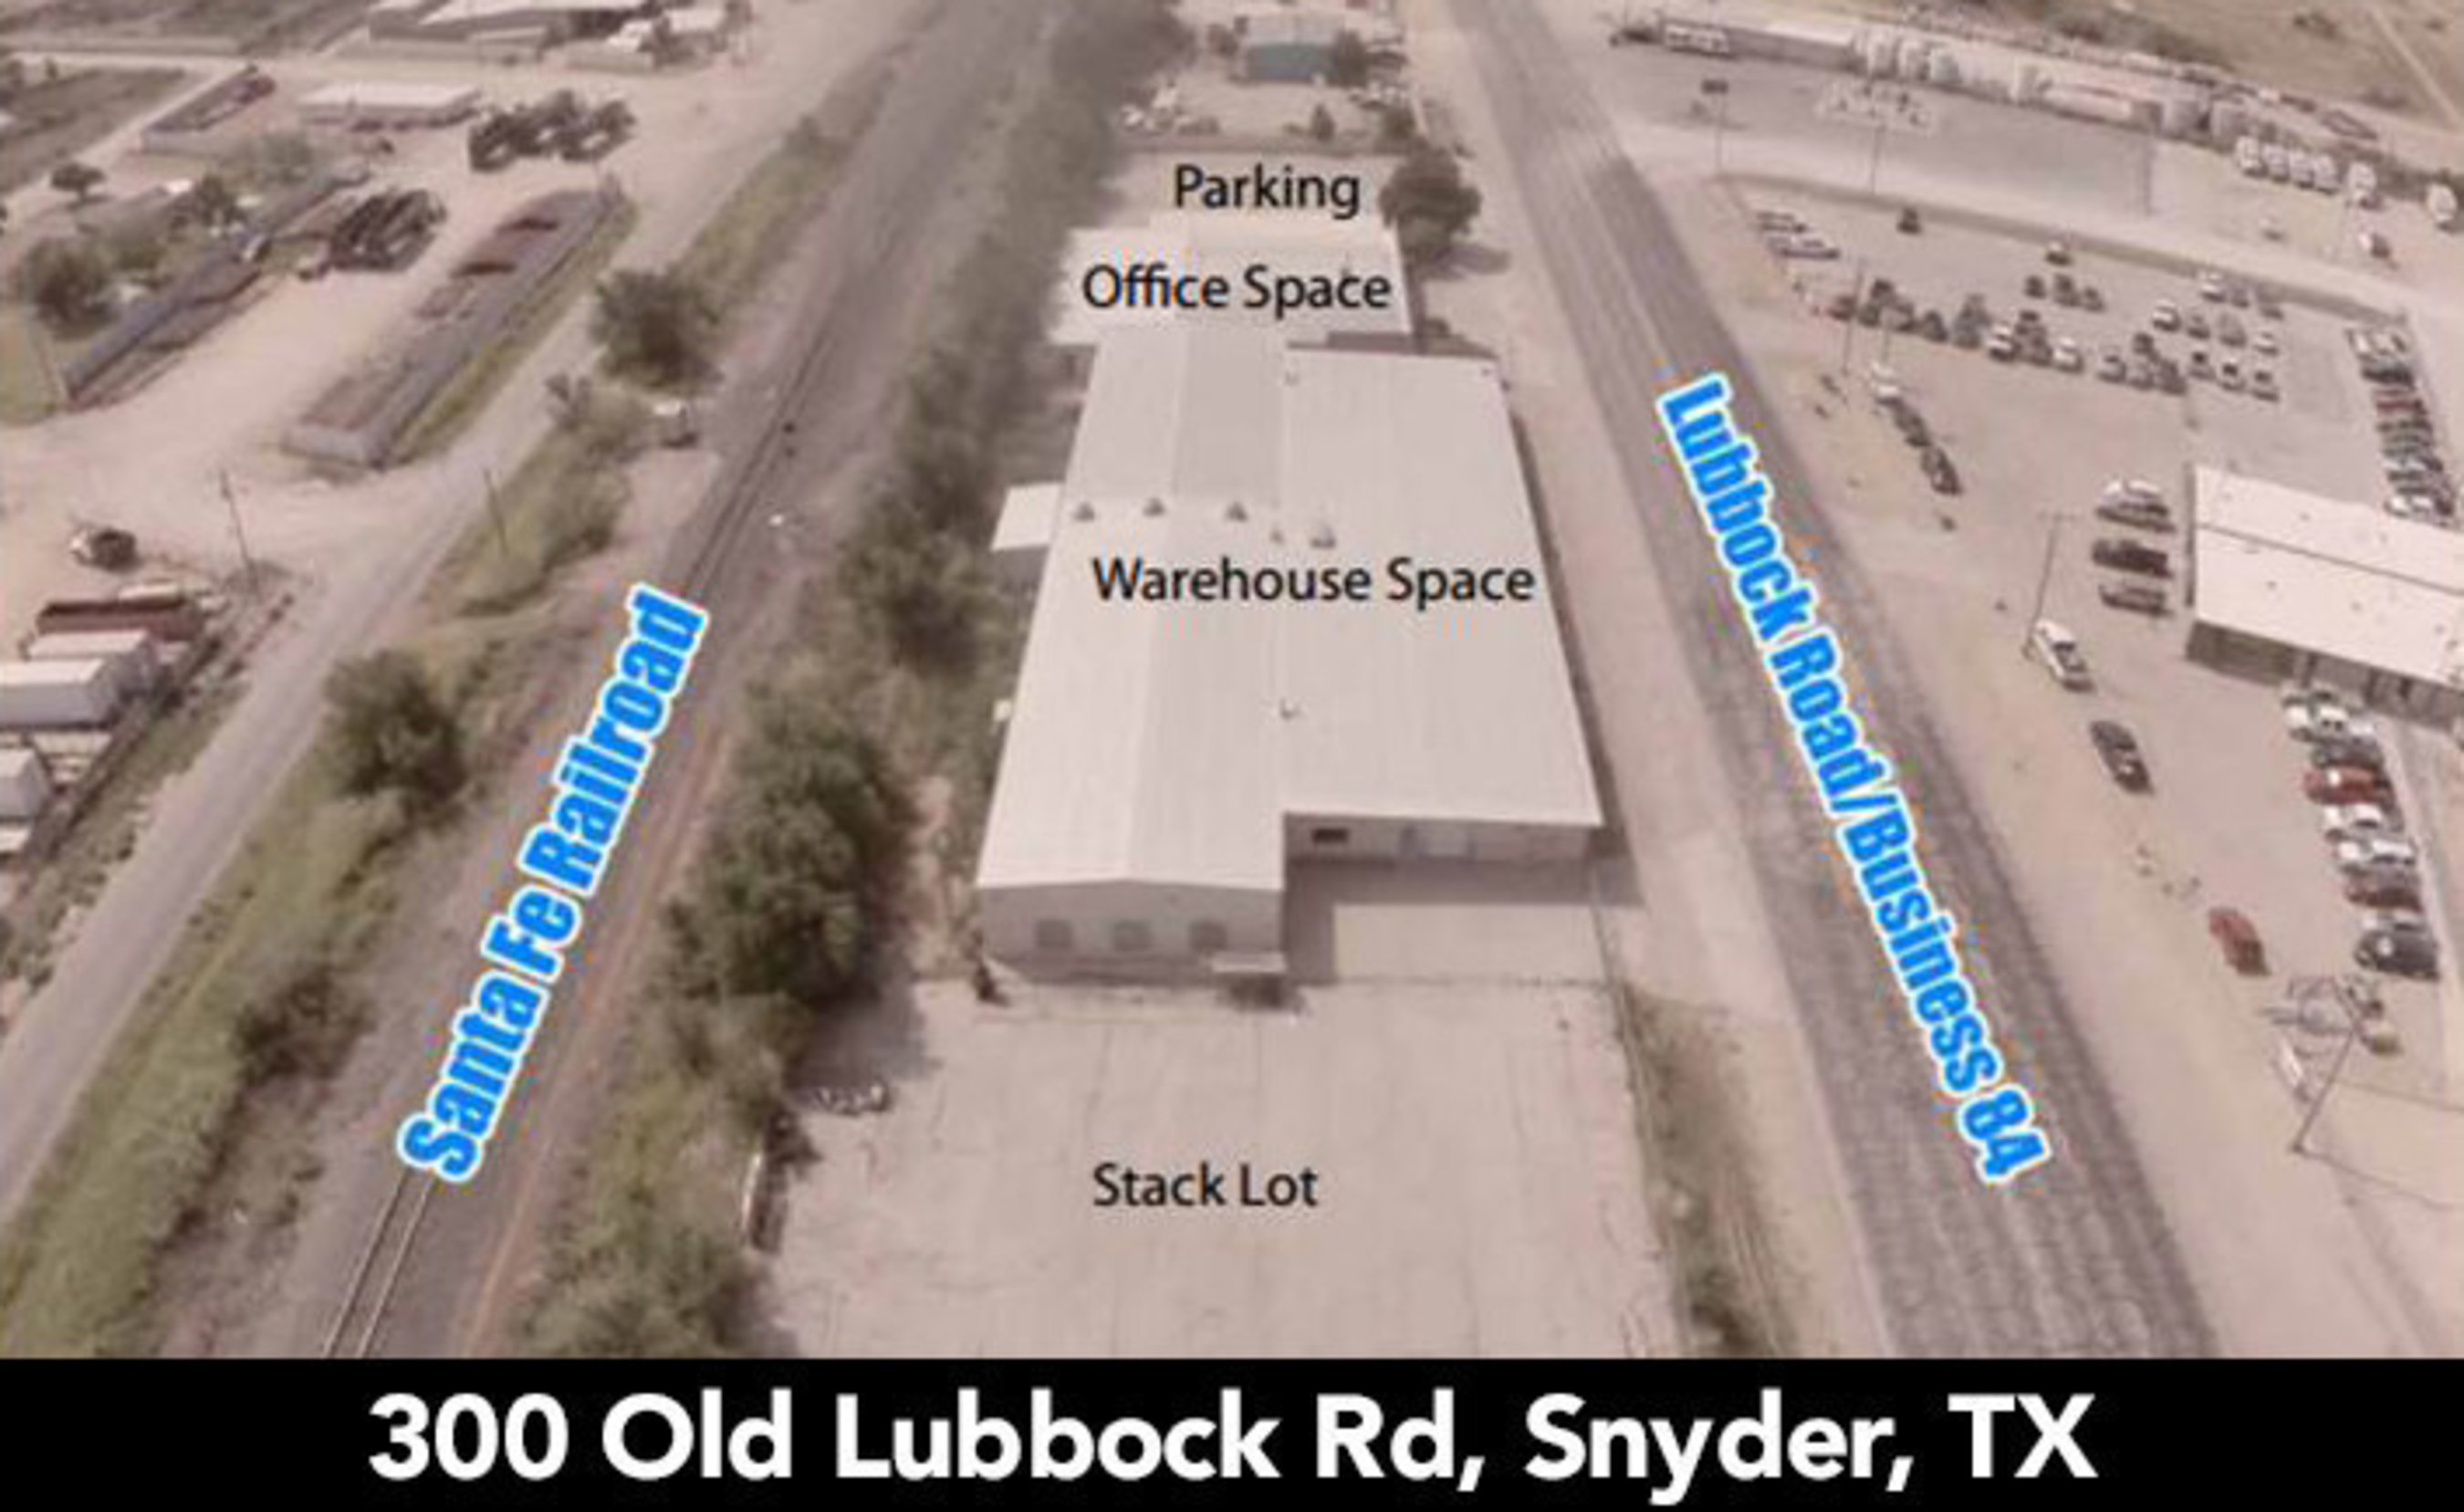 Snyder, TX Industrial Complex Auction